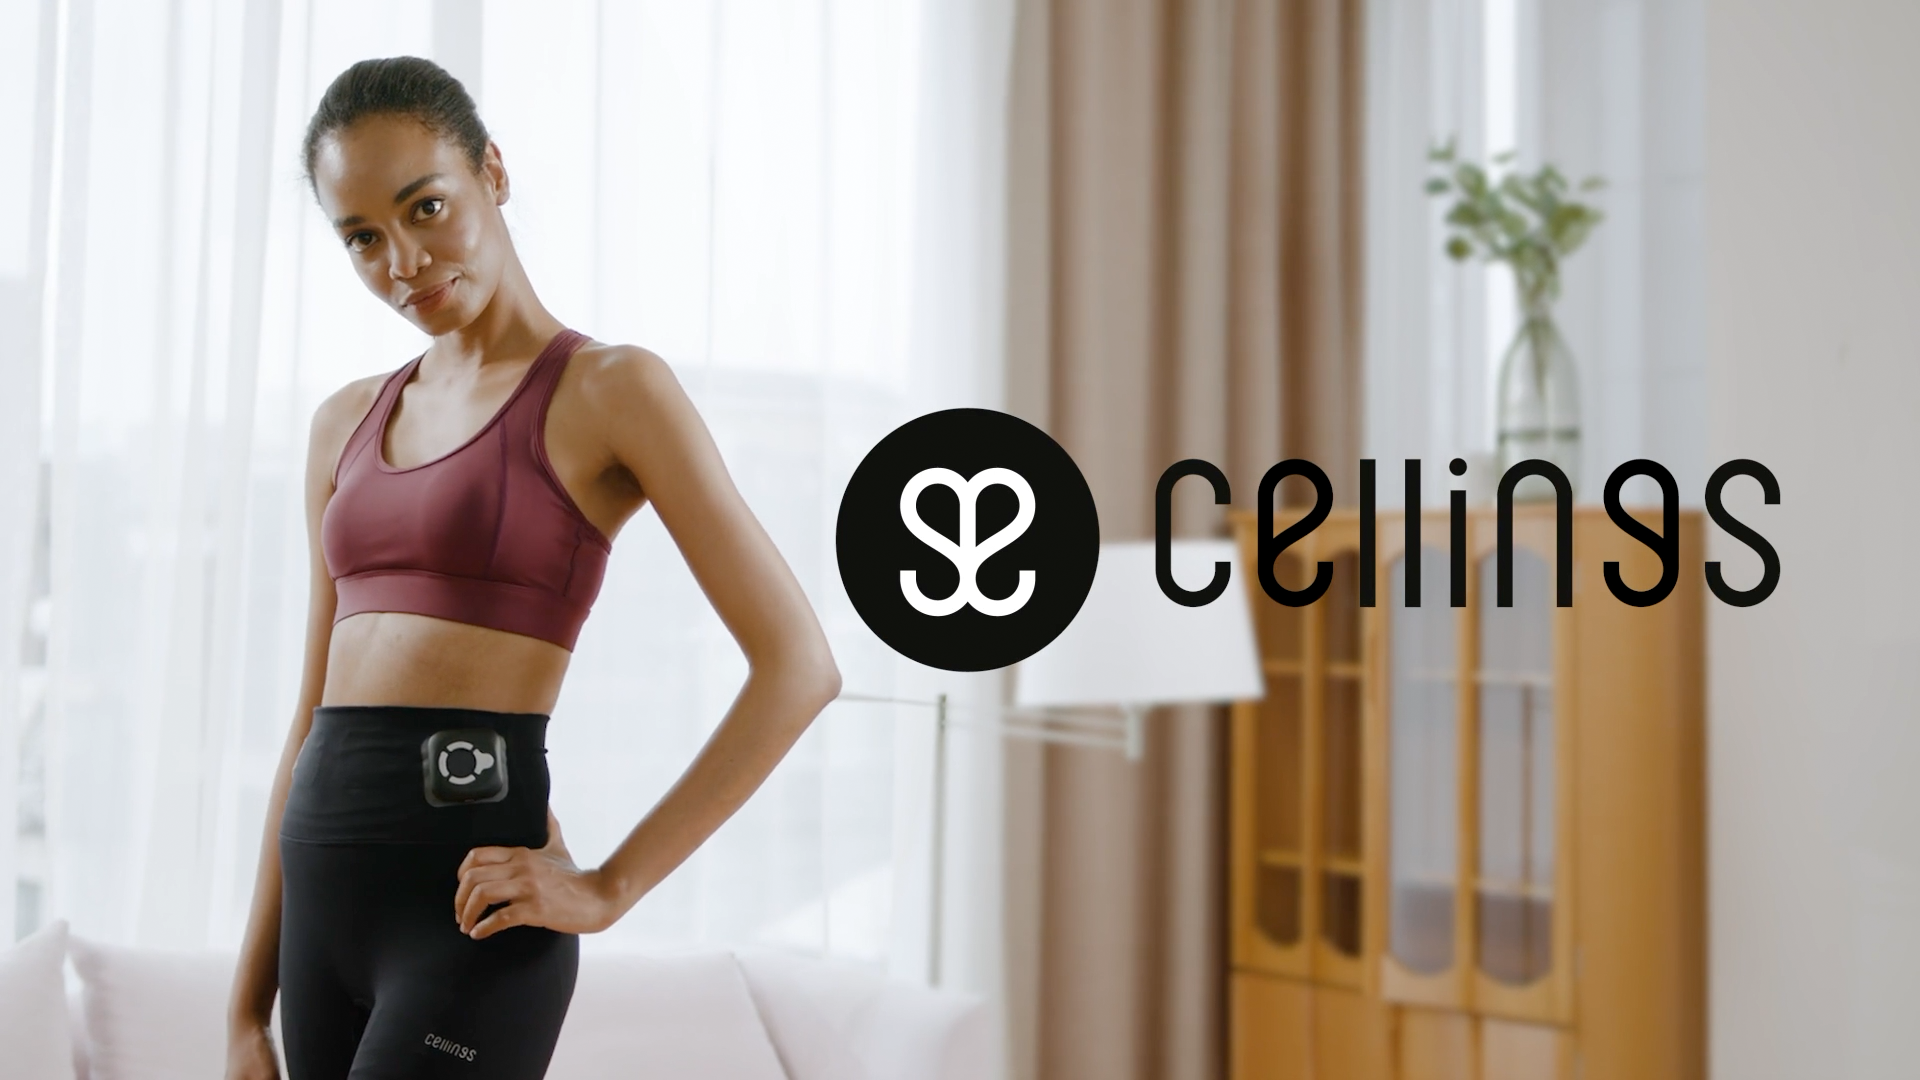 Cellings Kickstarter Video